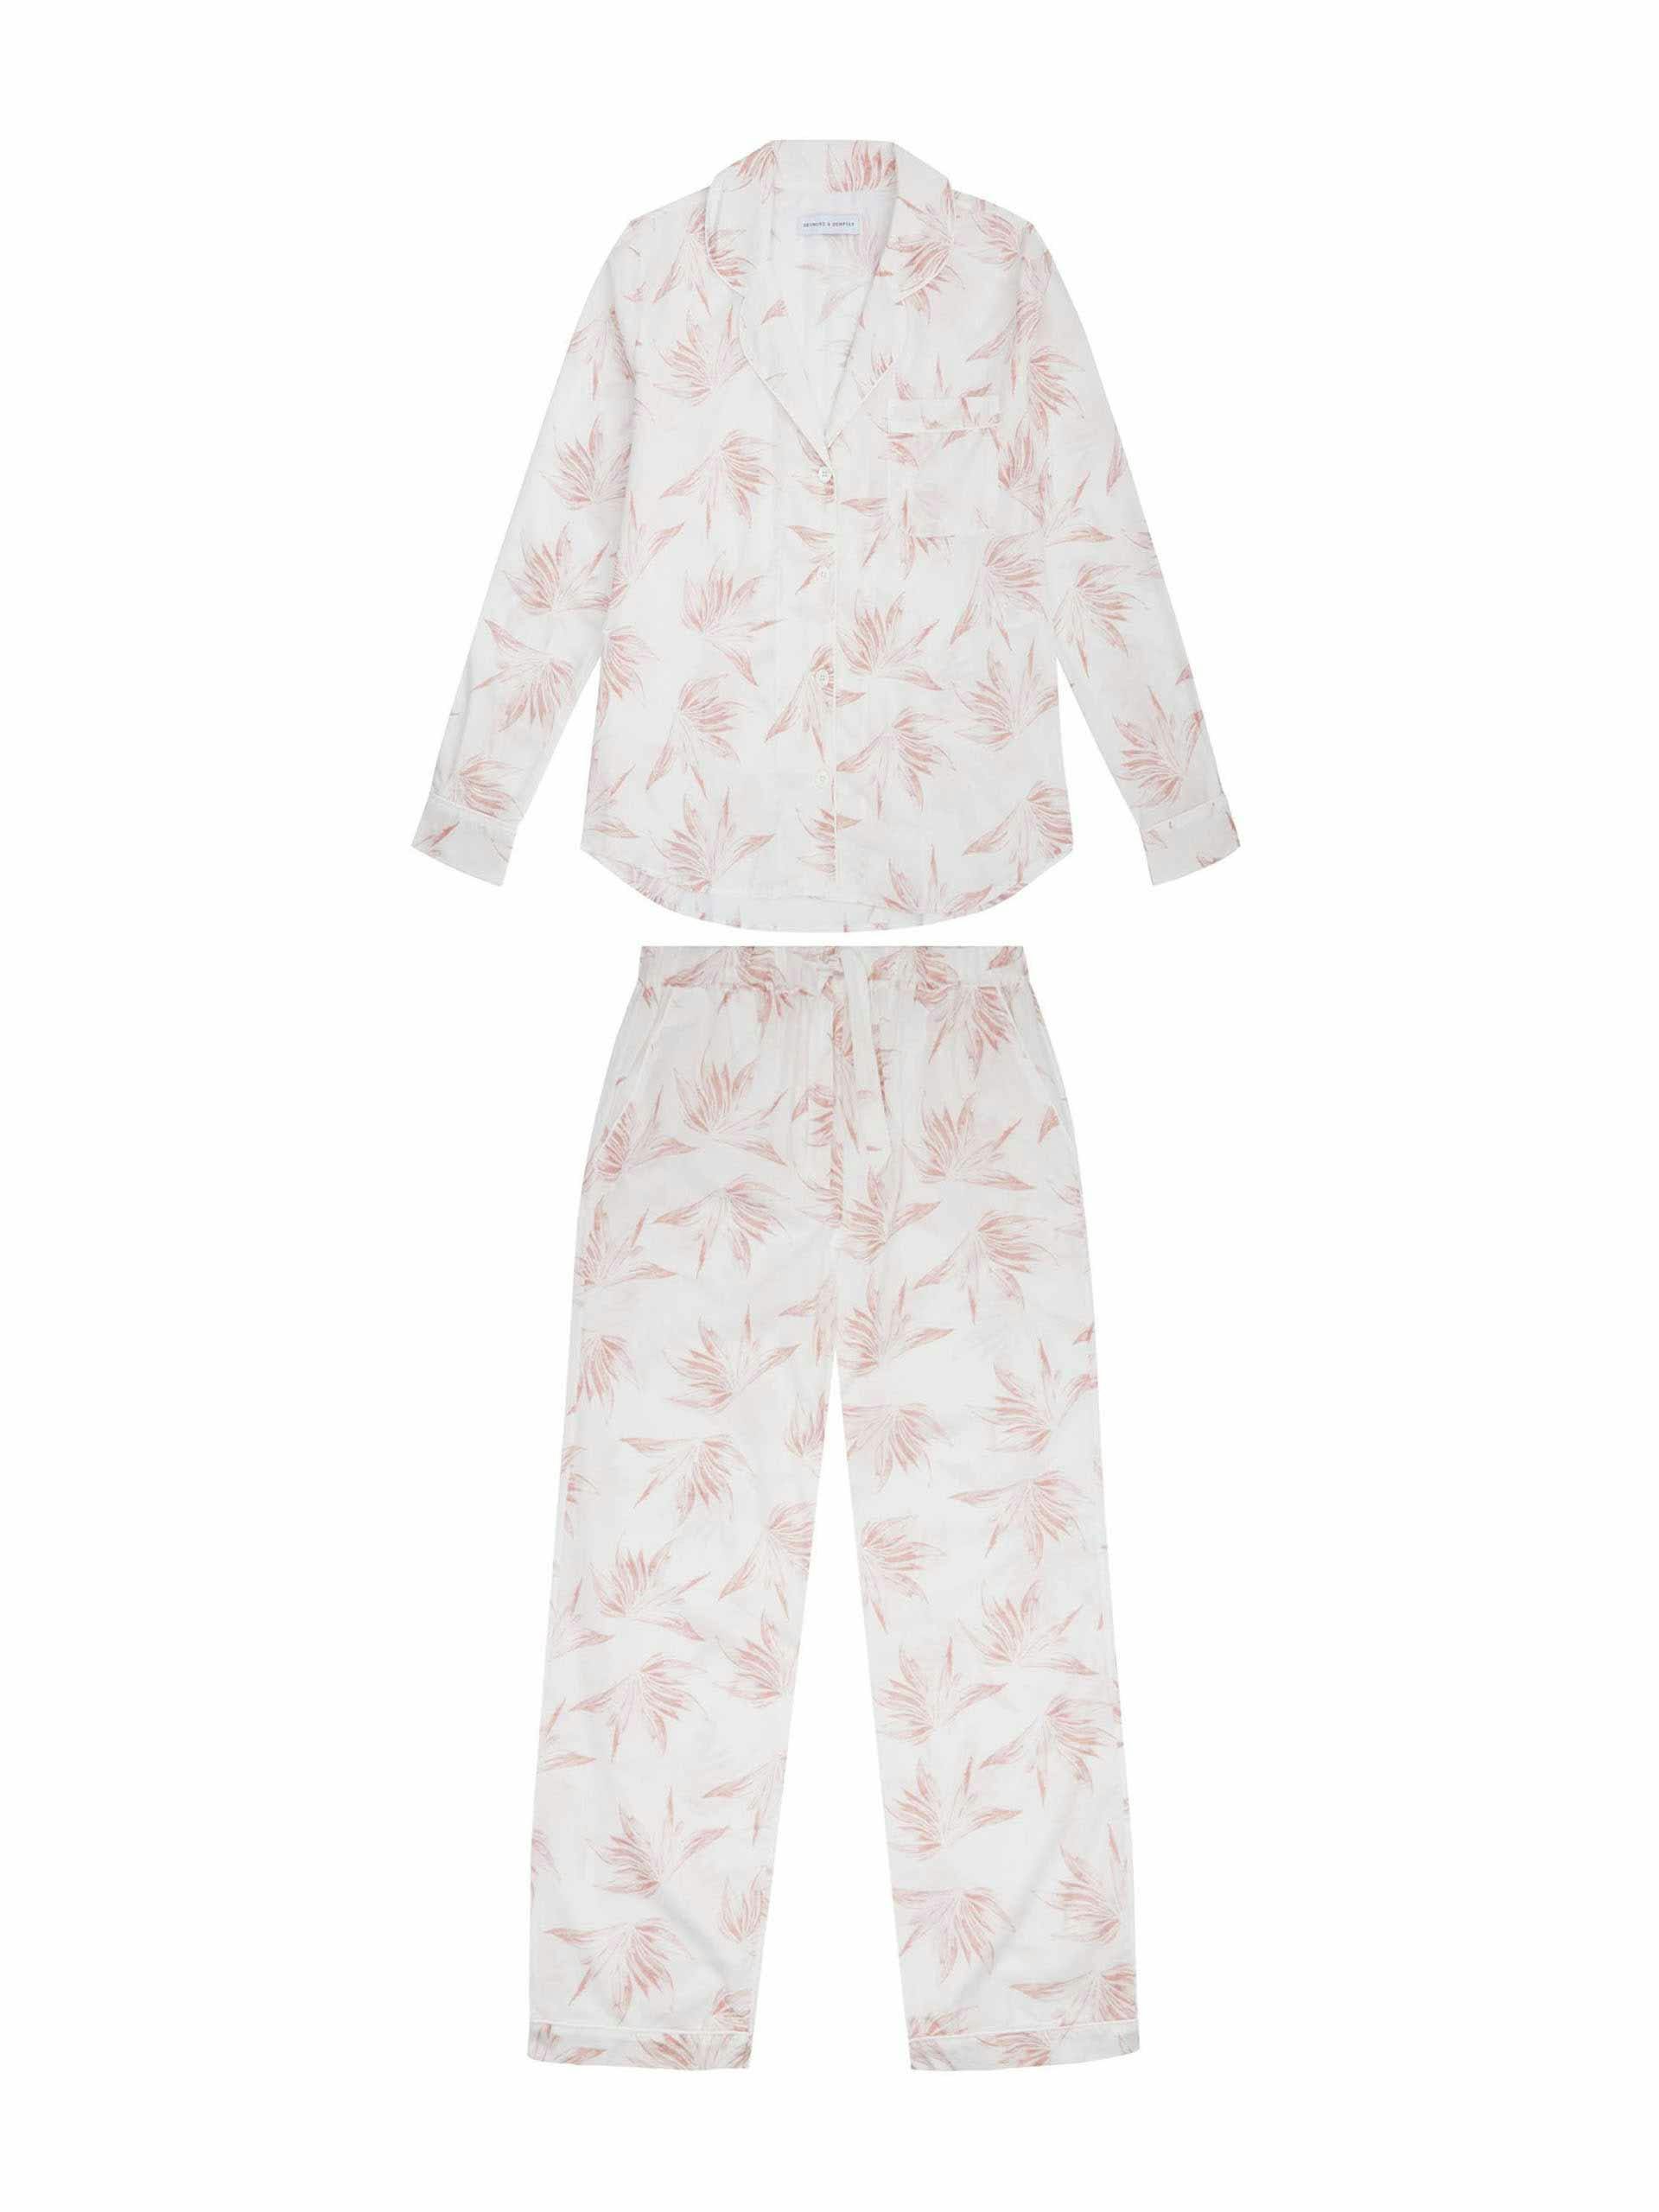 Long Deia white/pink print pyjama set